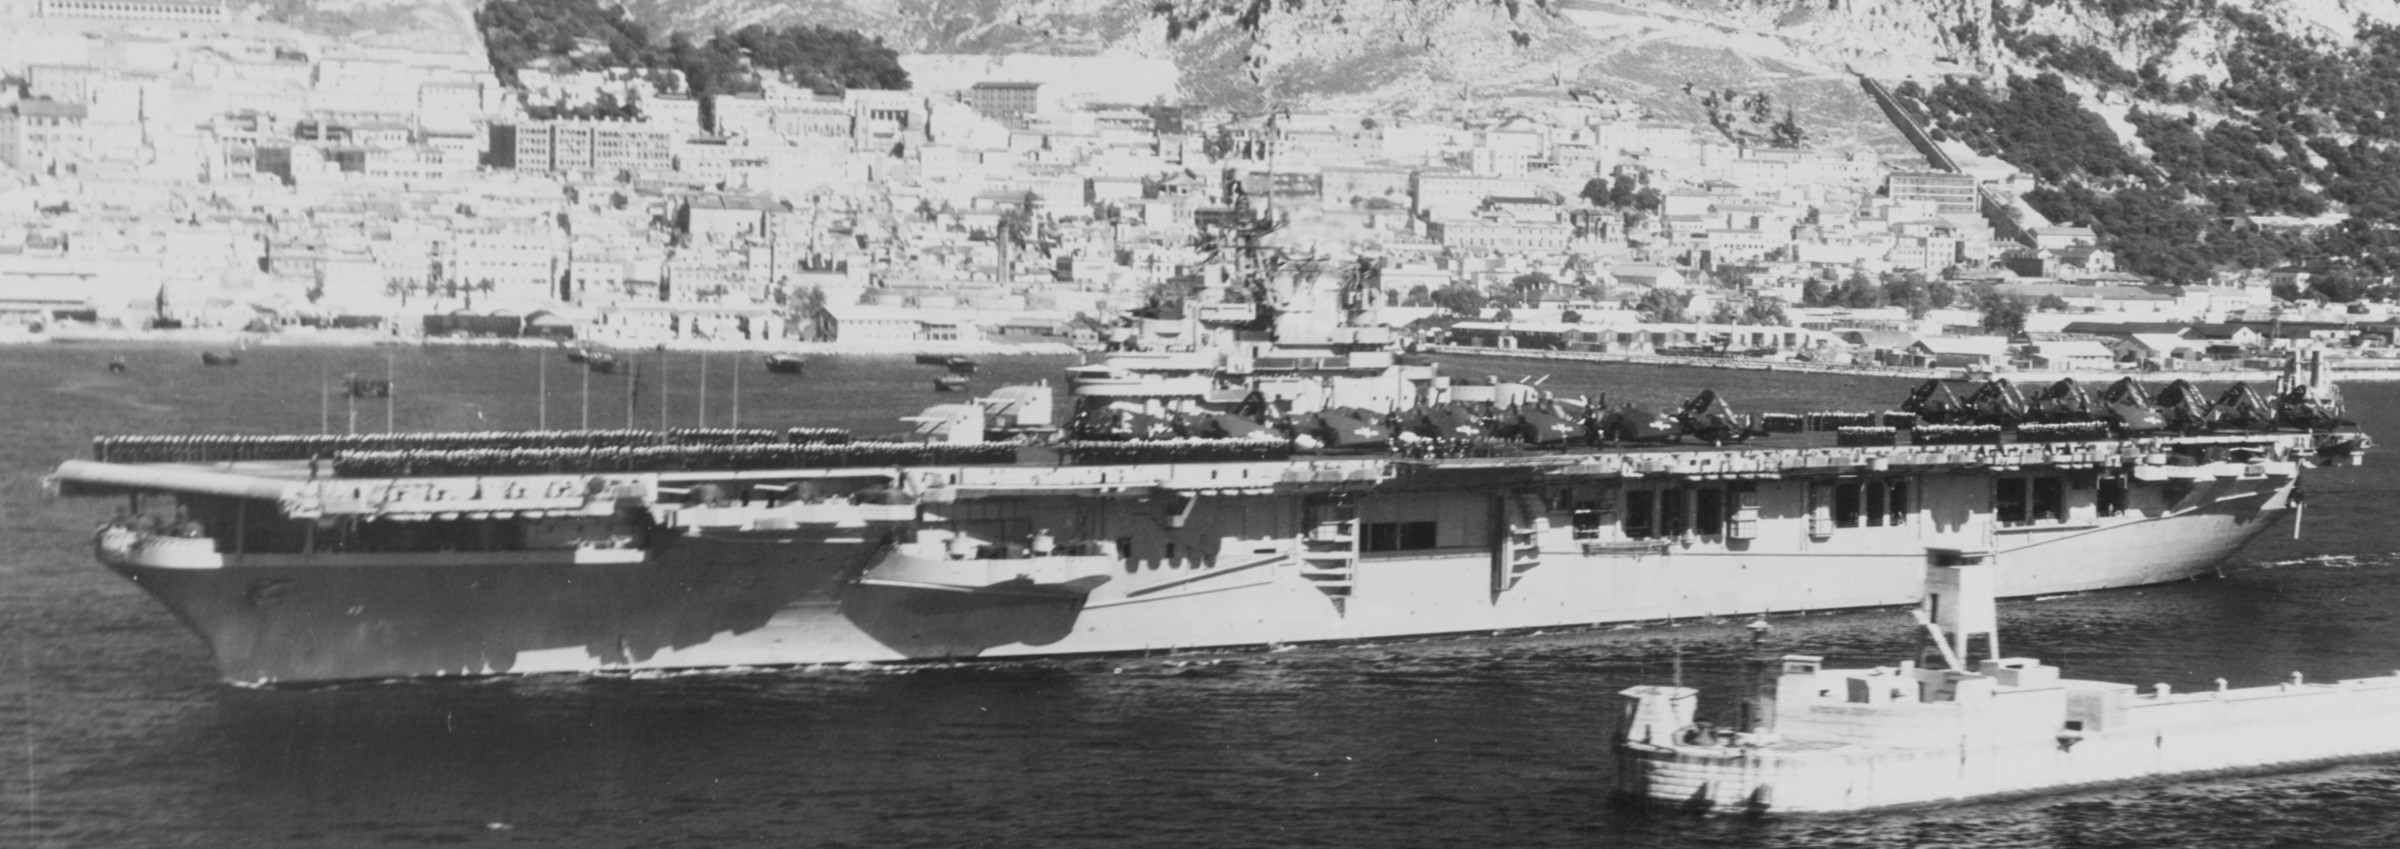 cv-45 uss valley forge essex class aircraft carrier us navy 35 gibraltar world cruise